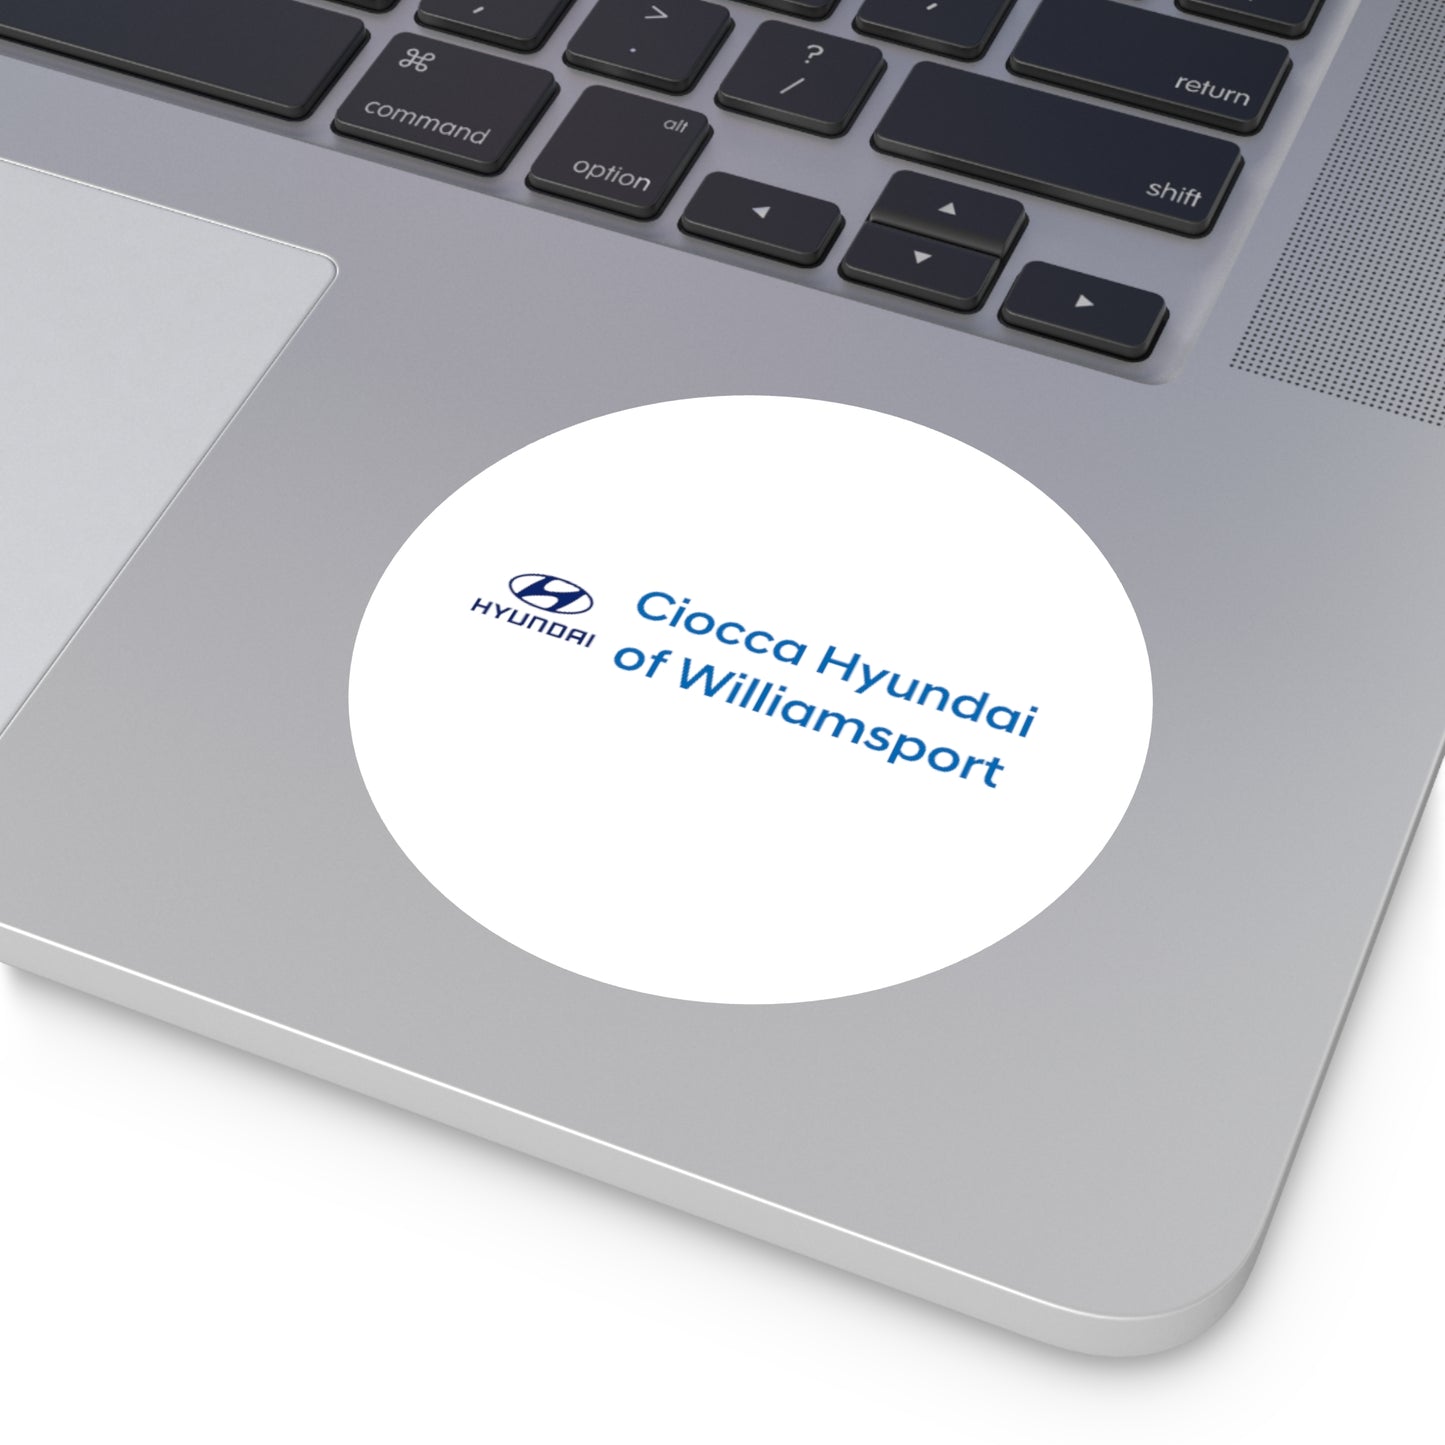 Round Vinyl Stickers - Hyundai Williamsport